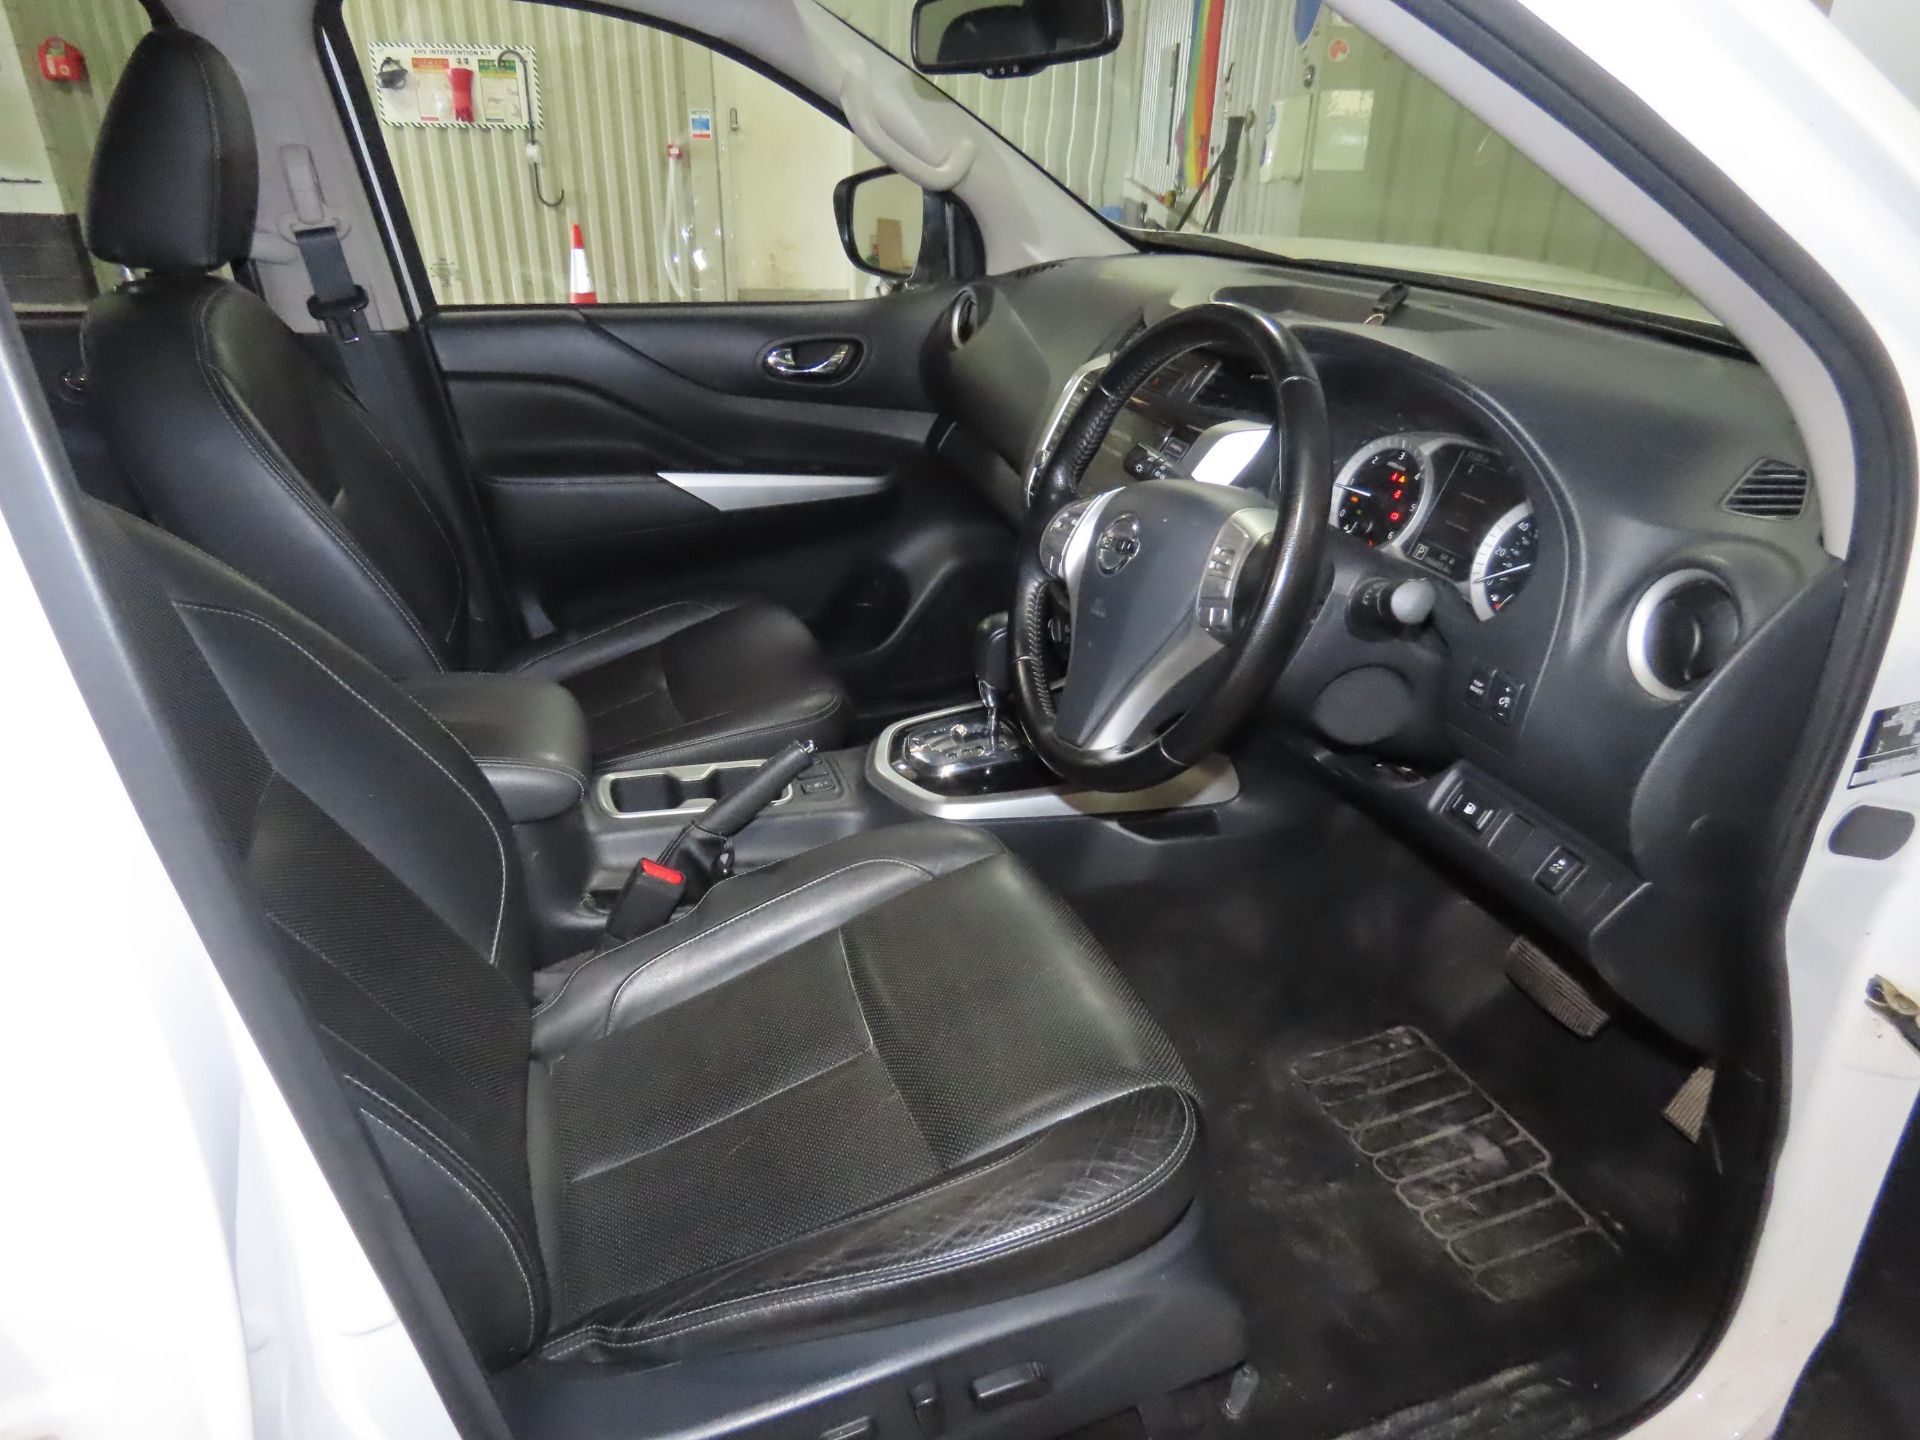 Reserve Met - Nissan Navara 2.3 DCI Tekna Edition Double Cab 4WD - Auto -2020 20 Reg - Air Con - - Image 8 of 12